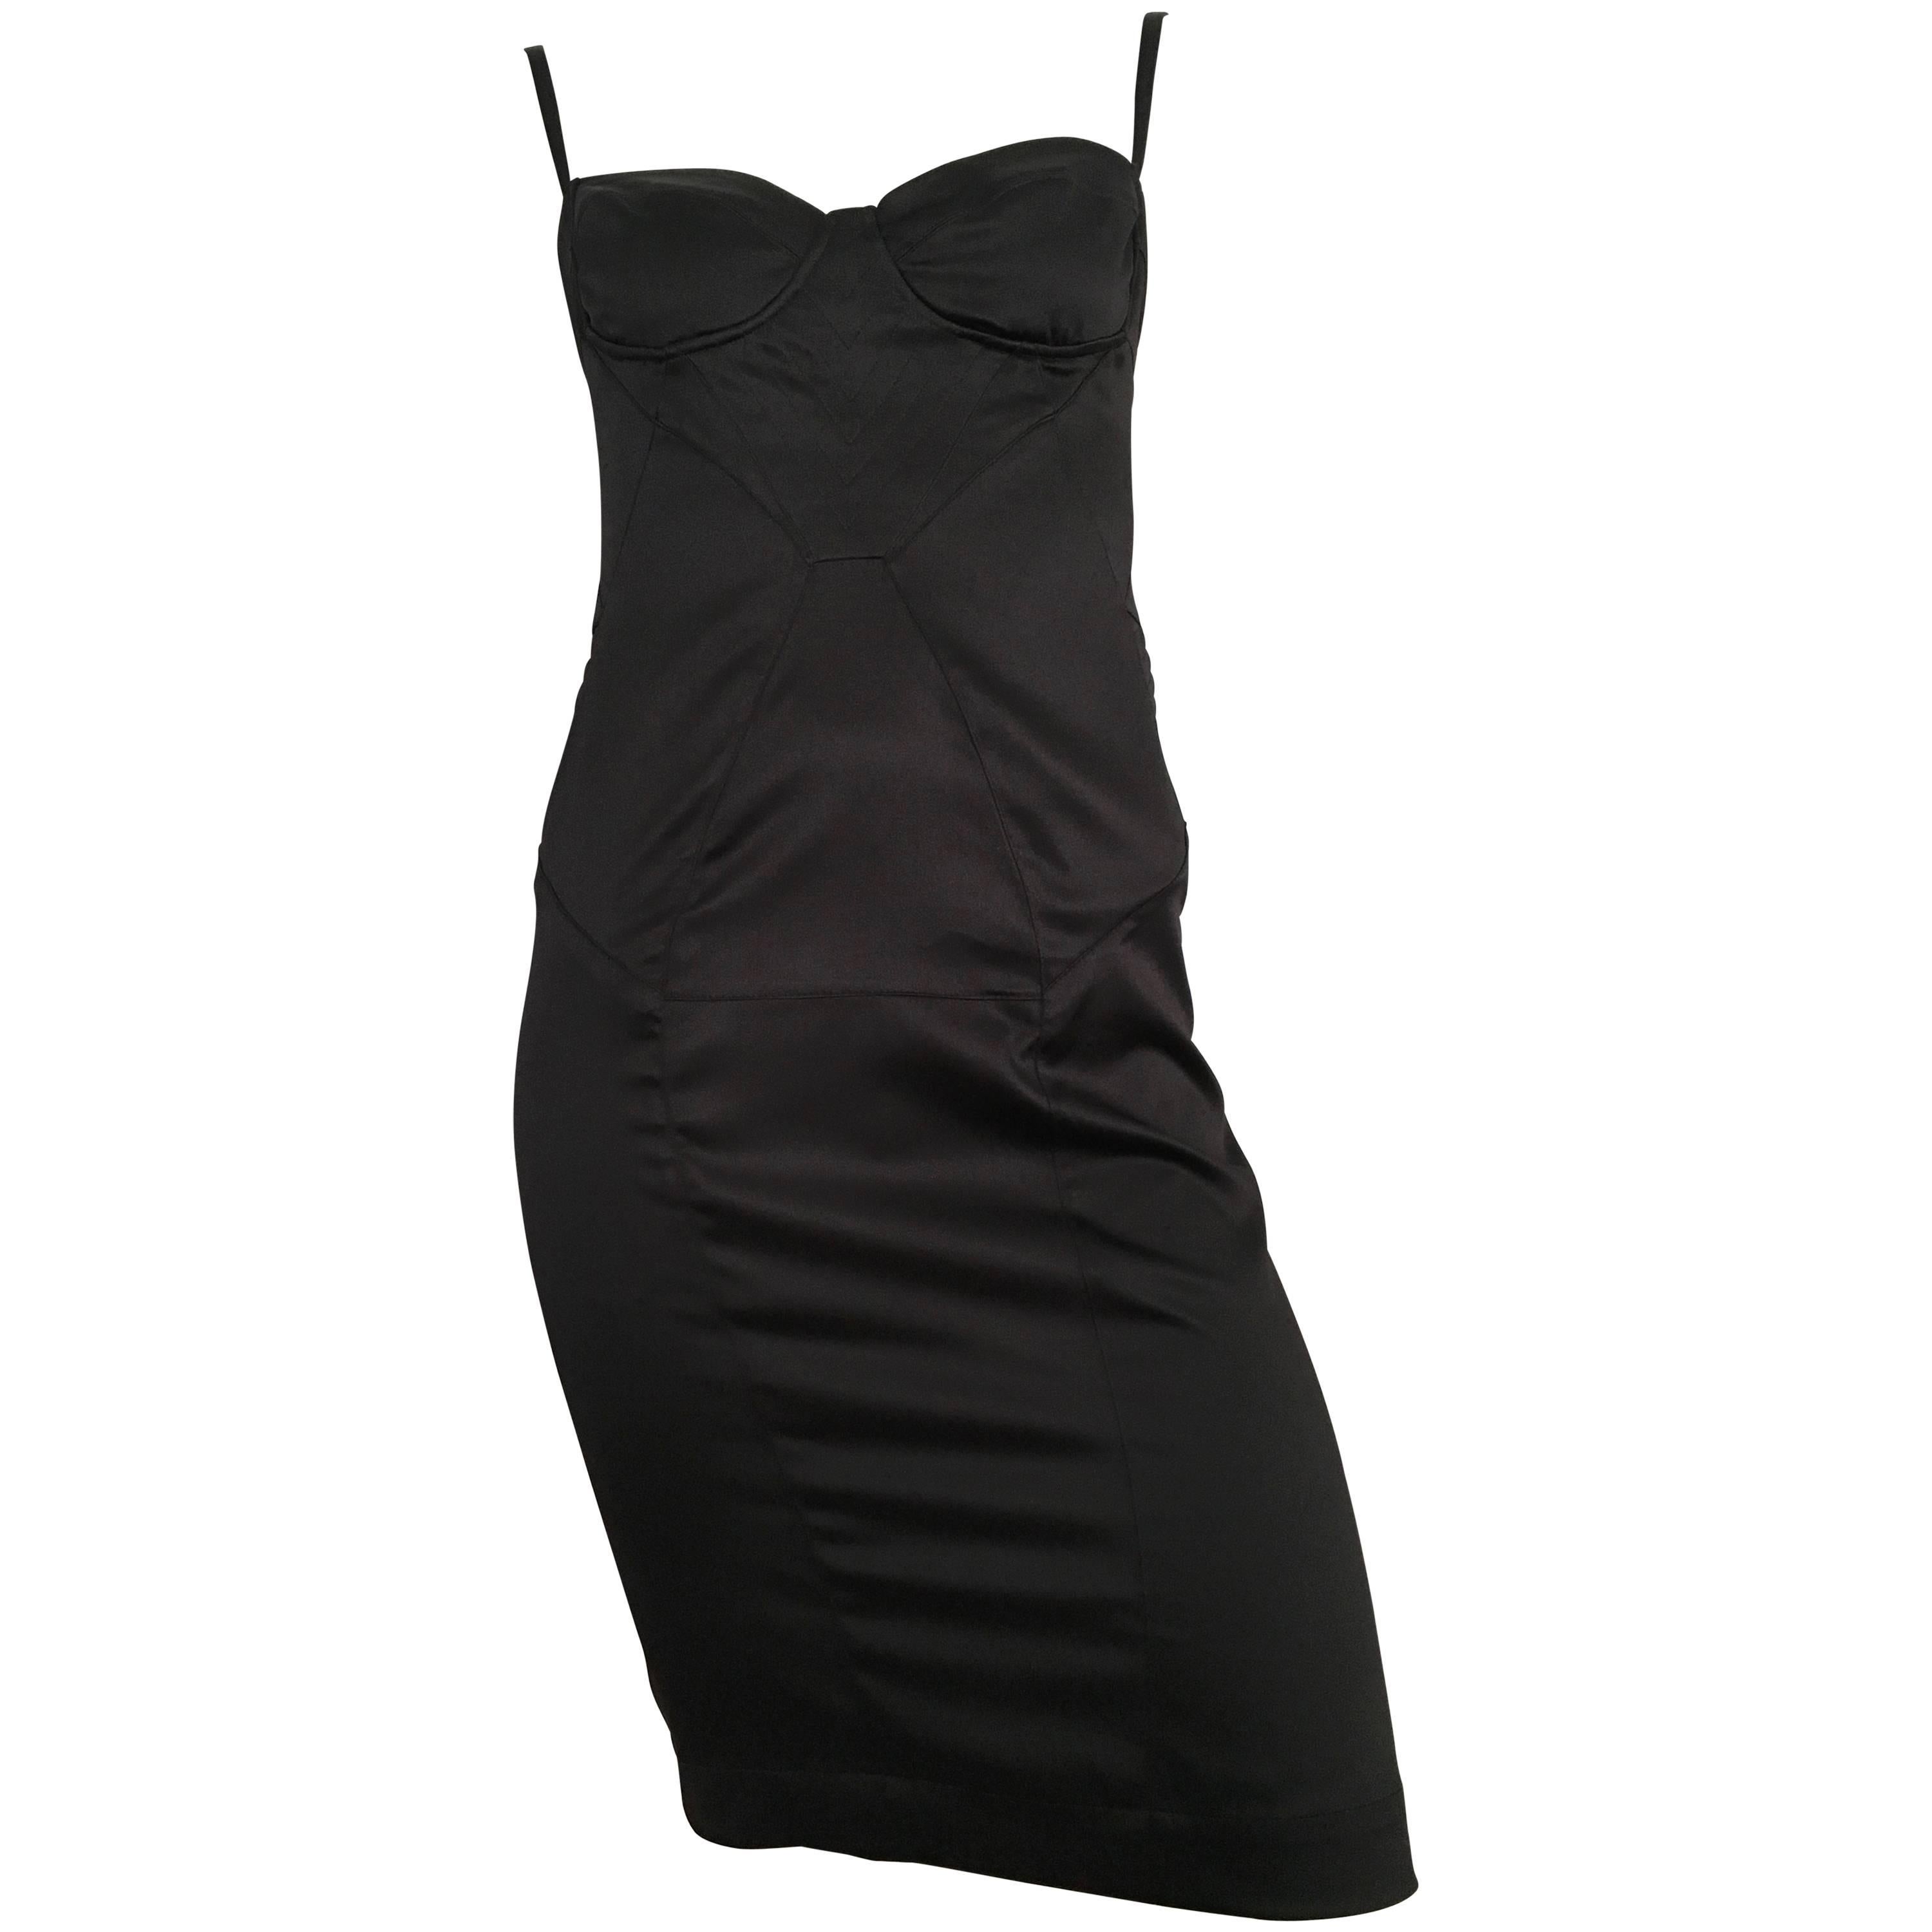 Cavalli Black Stretch Dress Size 4.